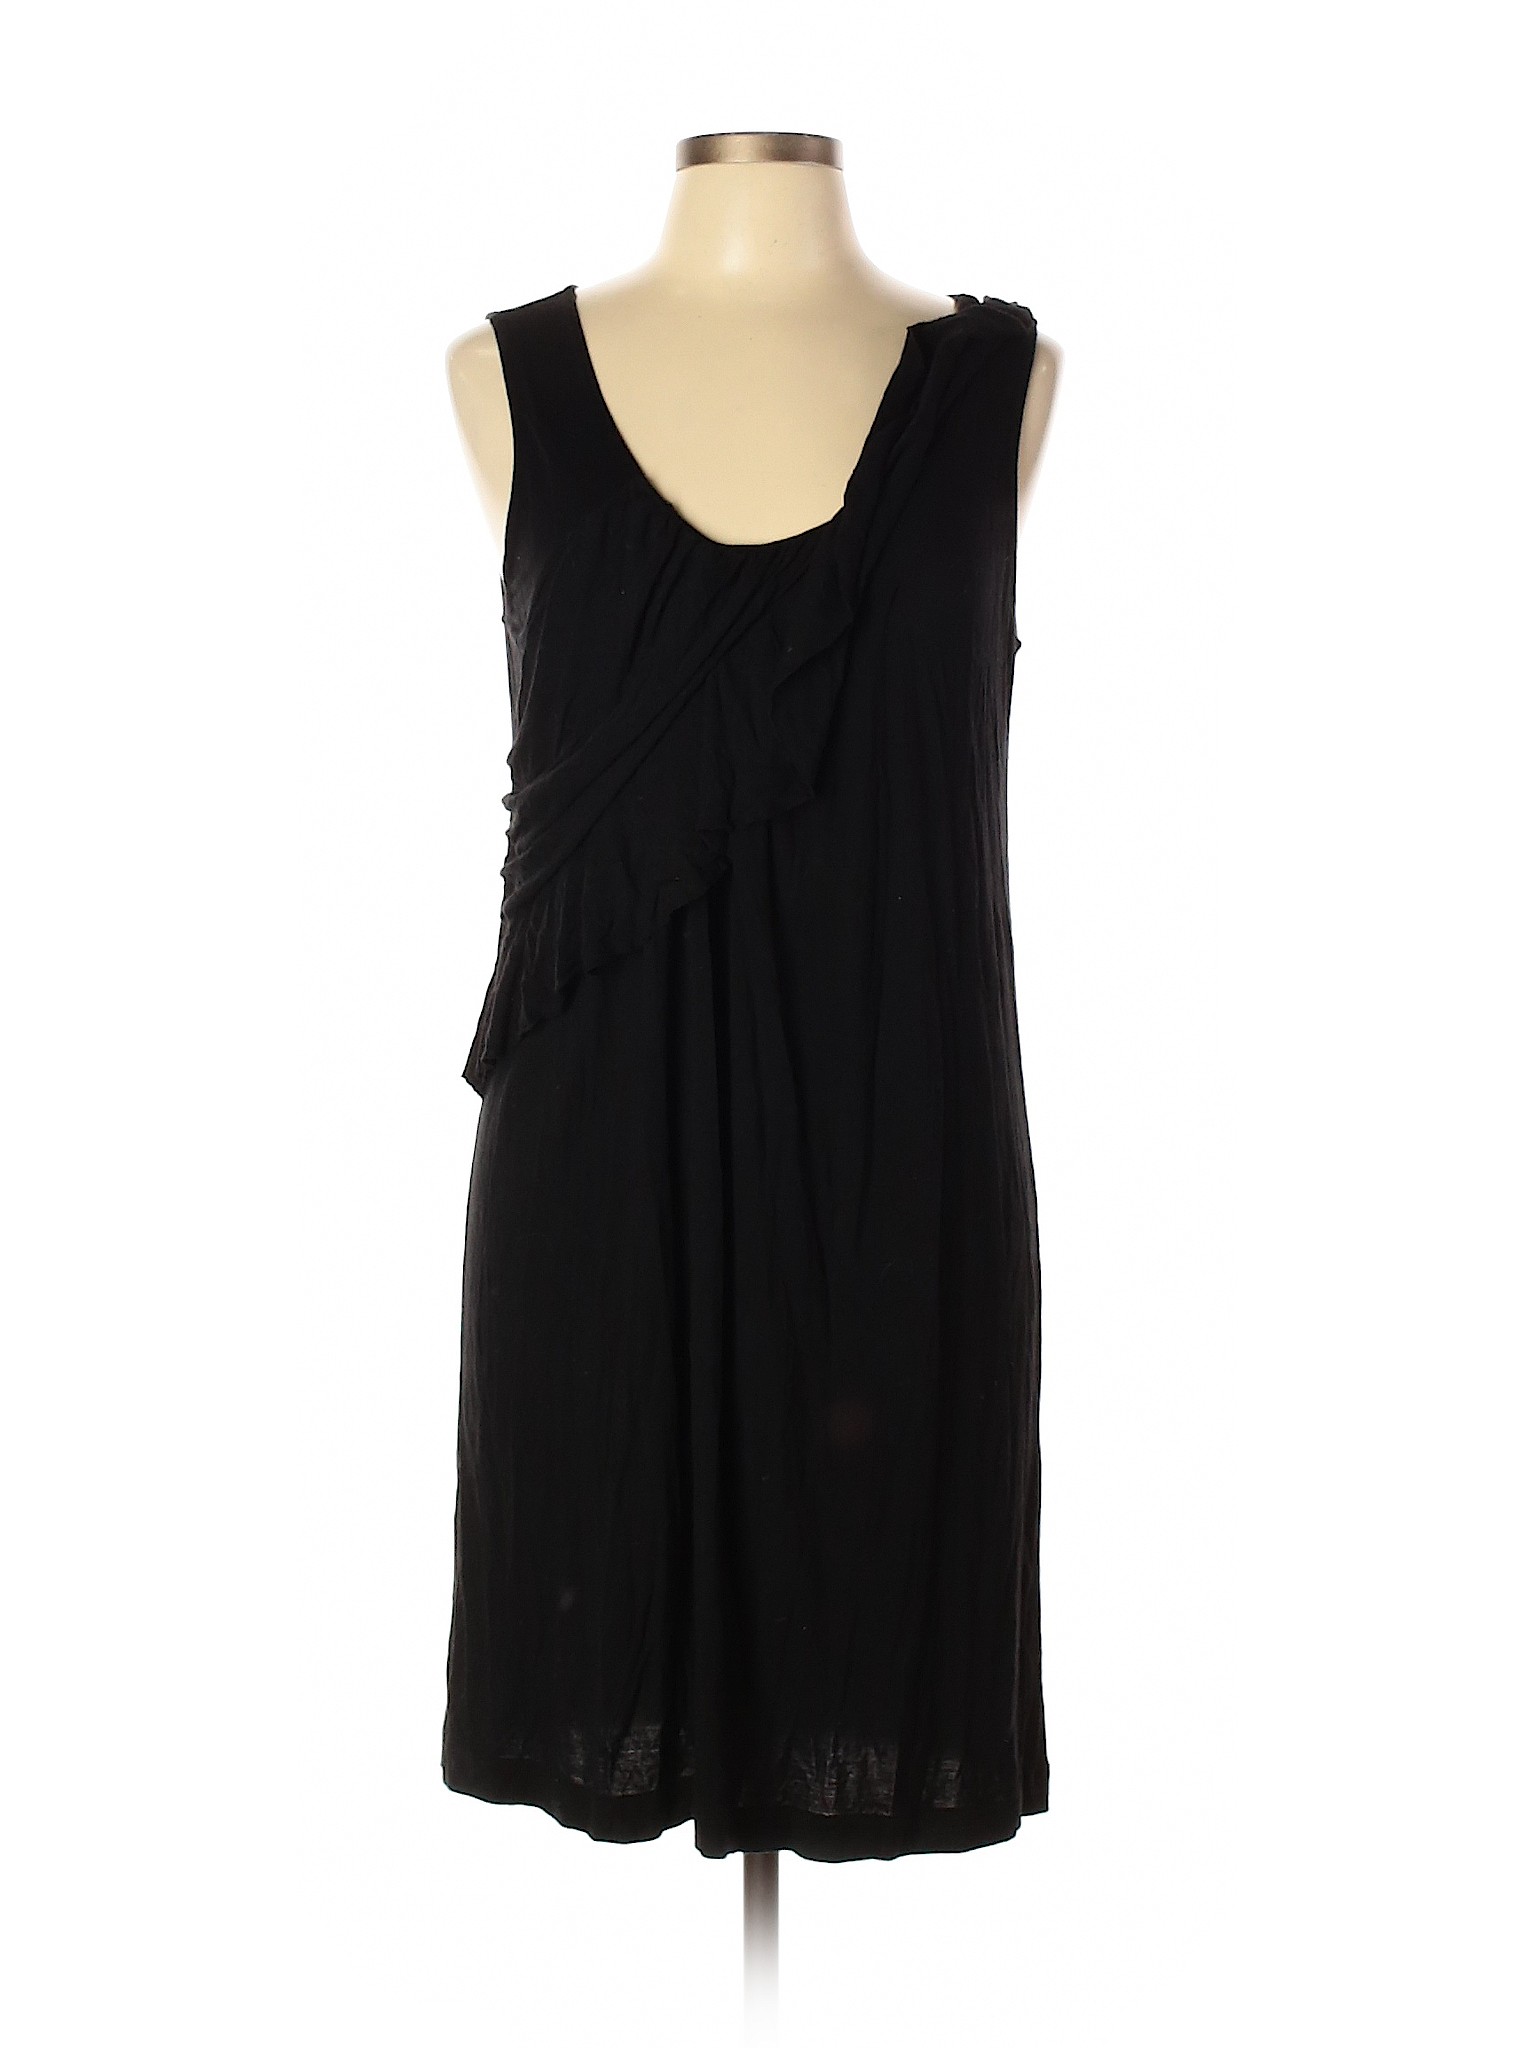 Daisy Fuentes Women Black Cocktail Dress L | eBay